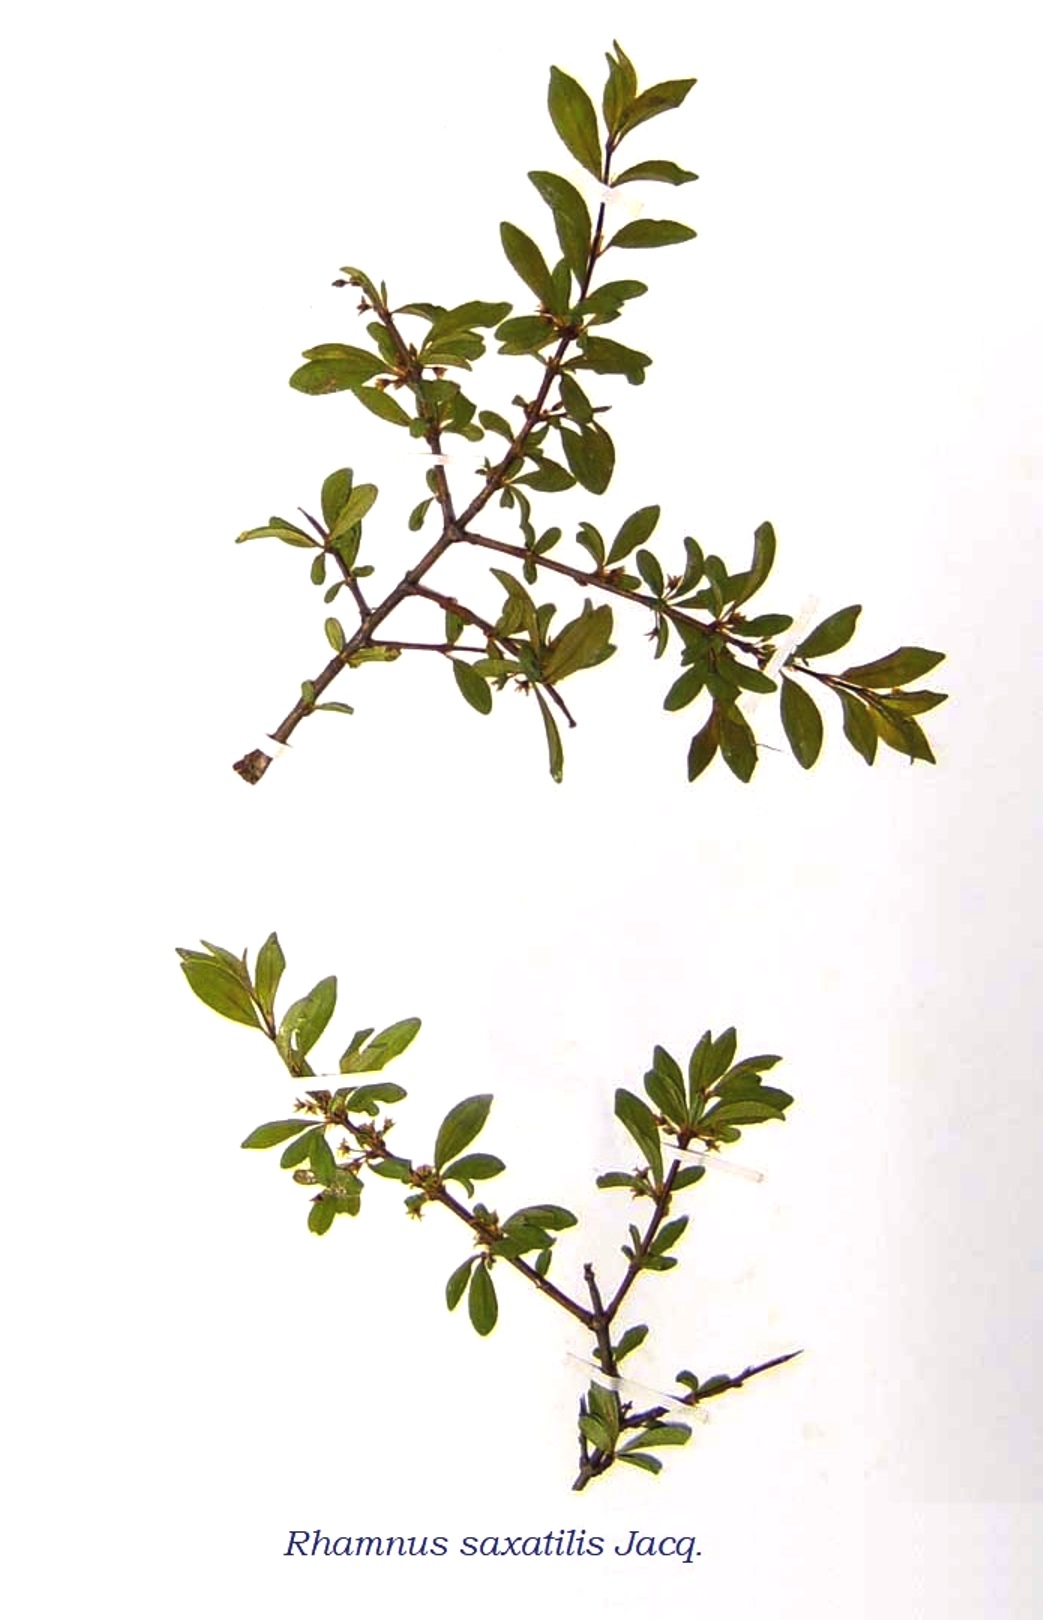 Image of Rhamnus saxatilis, free to use